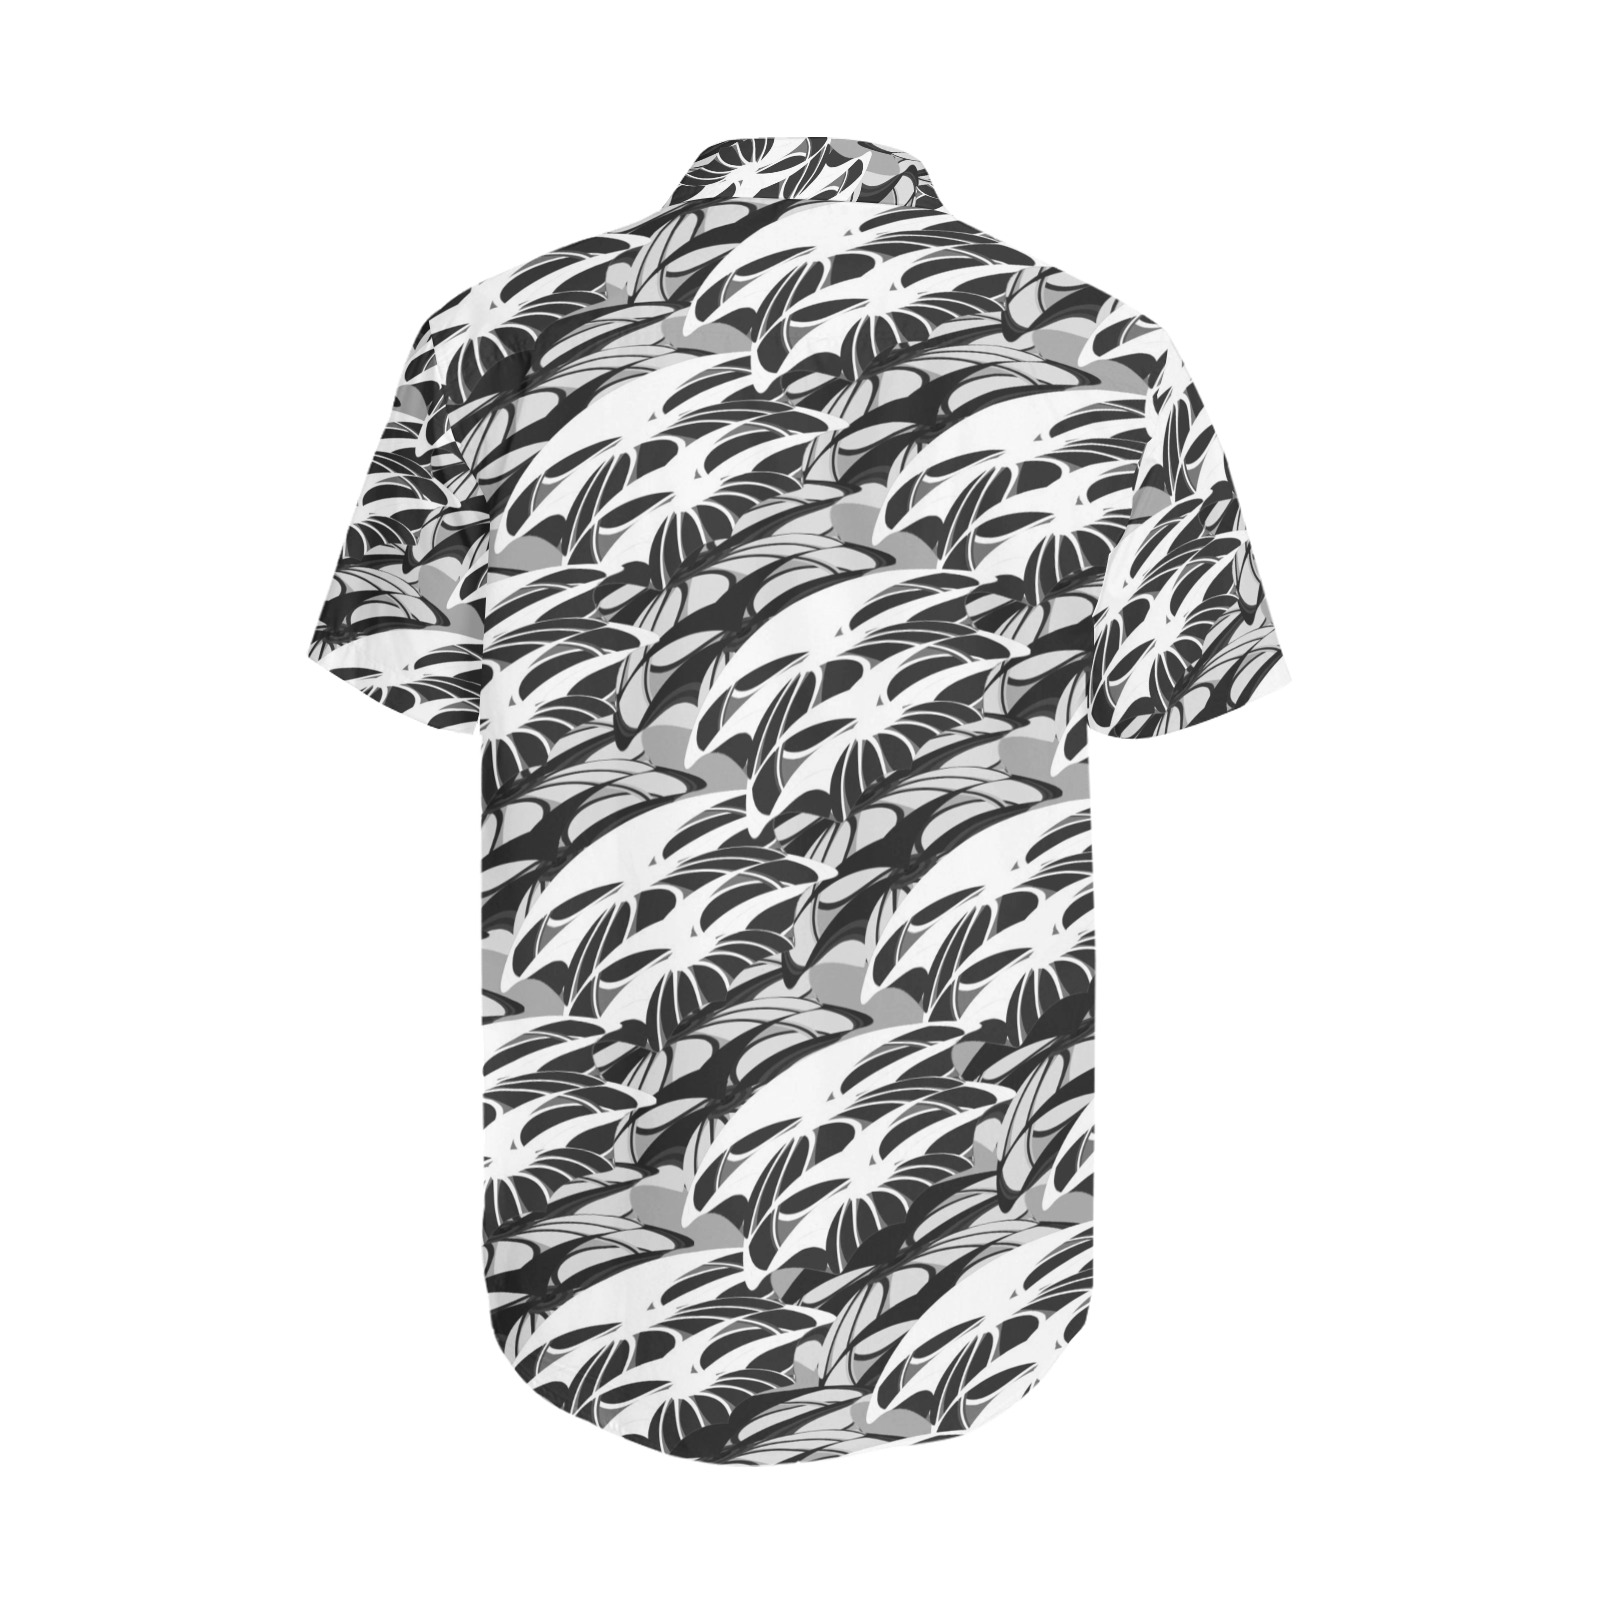 Alien Troops Pattern Men's Short Sleeve Shirt with Lapel Collar (Model T54)